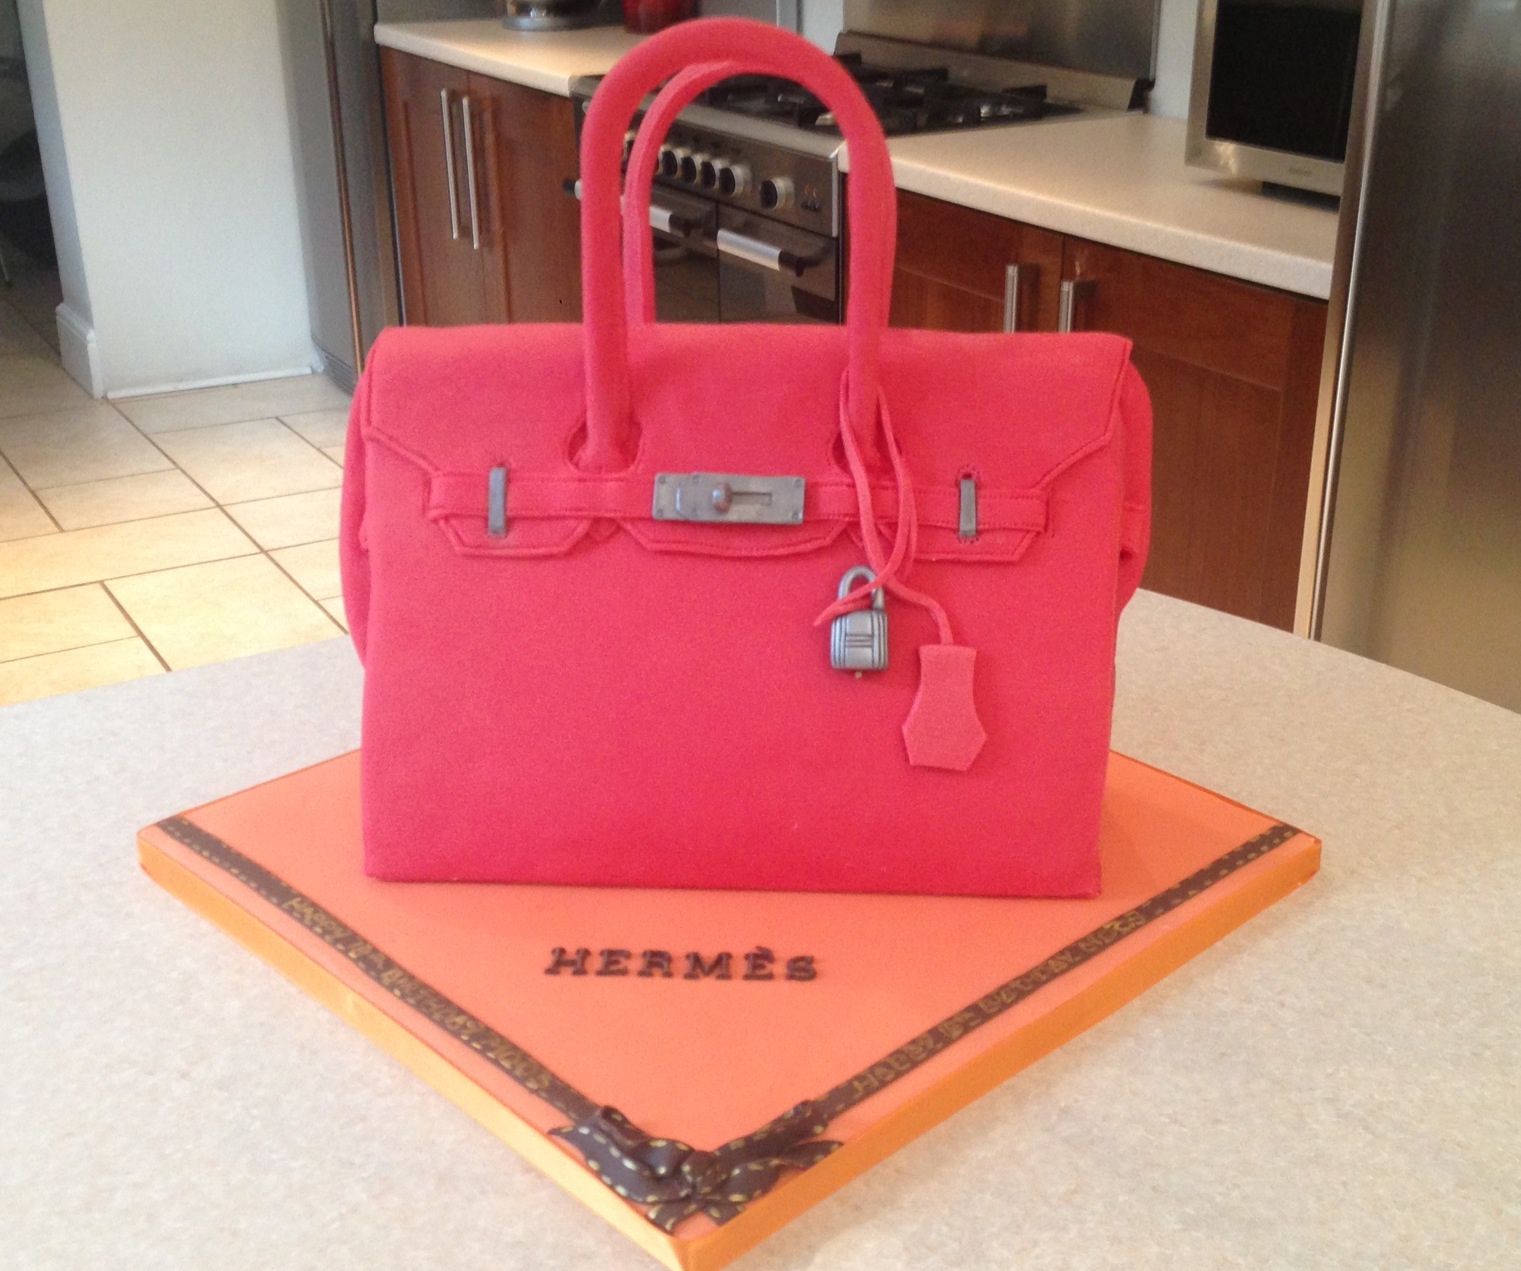 Hermes birkin bag cake | The Great British Bake Off